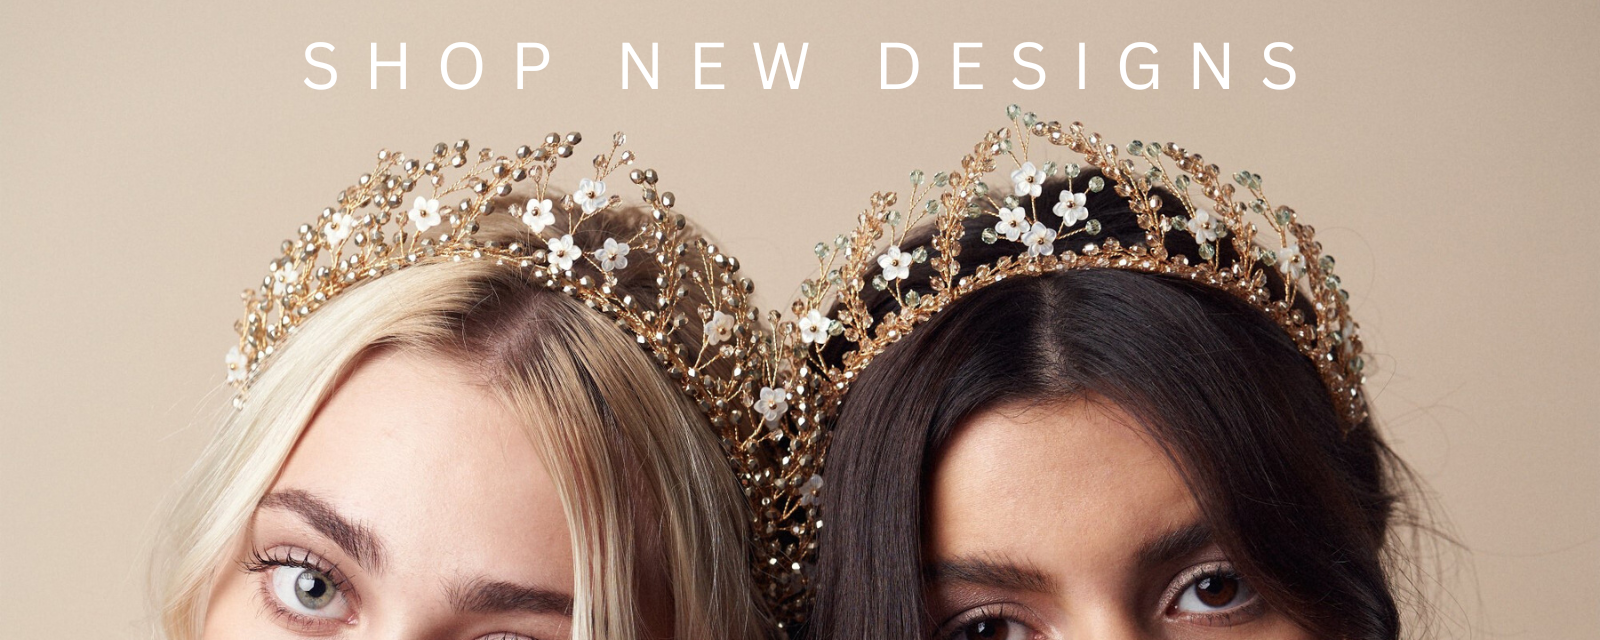 Two models wear gold crystal flower crowns